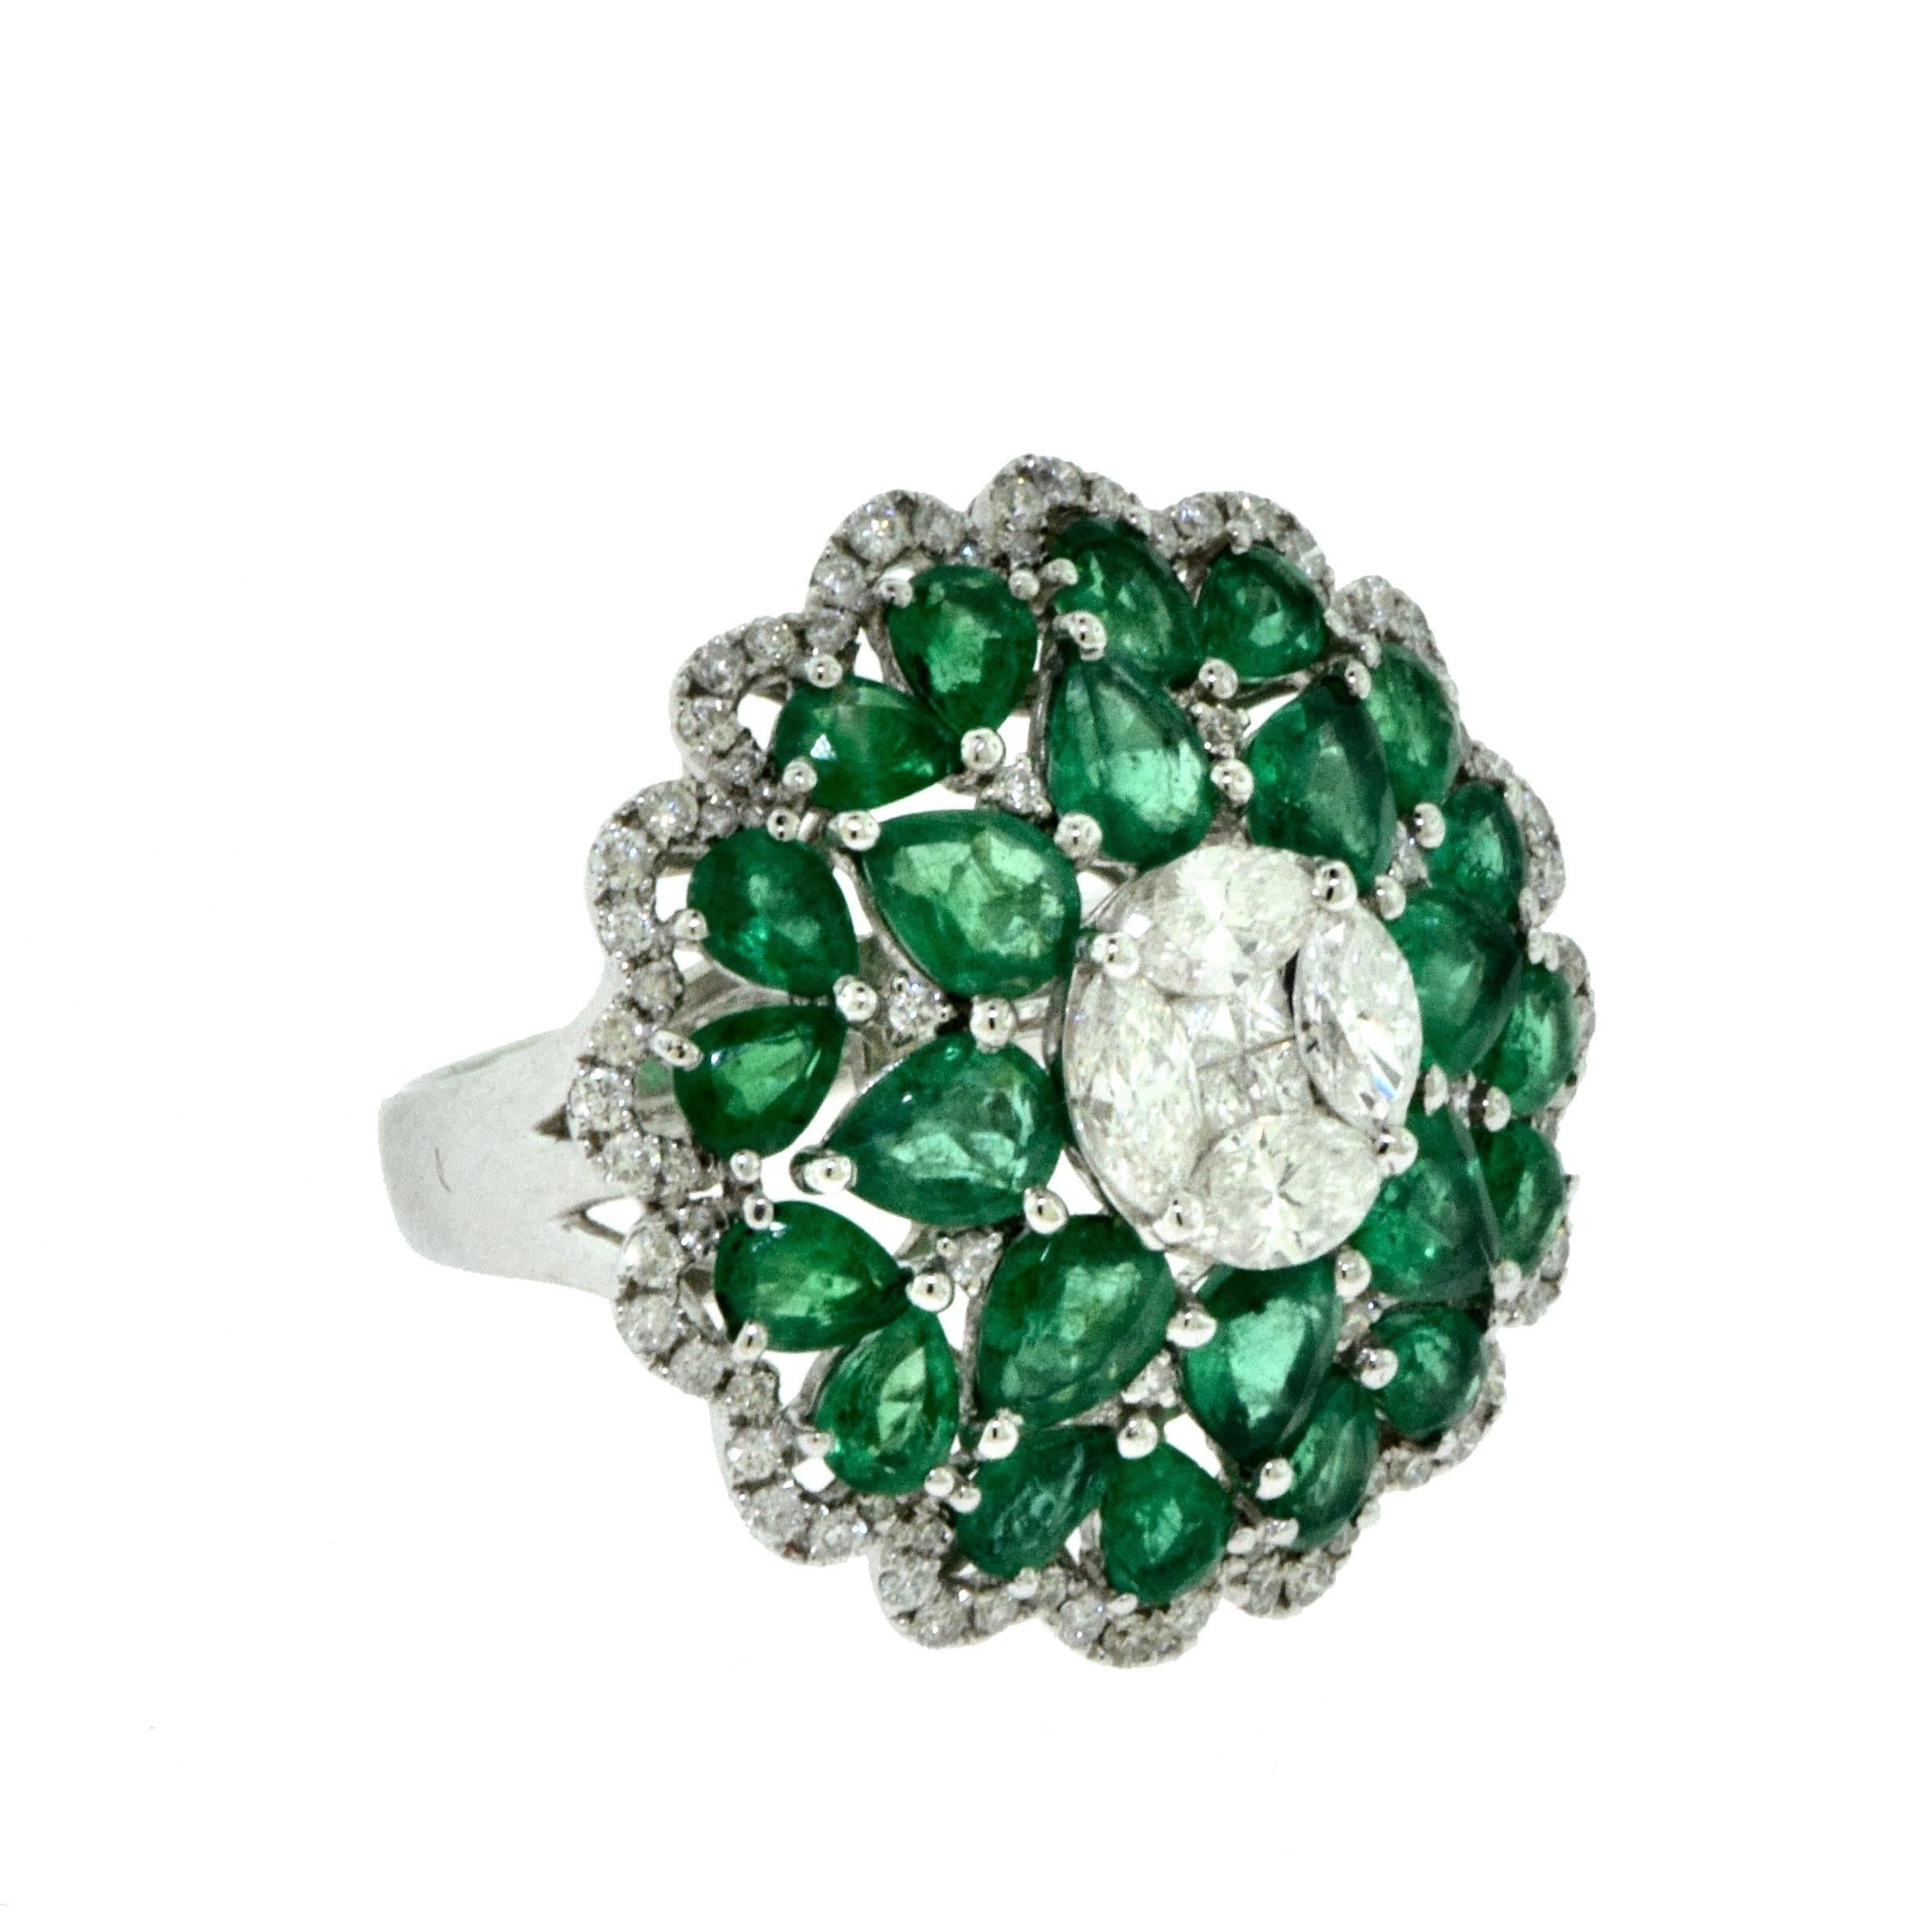 Metal: White Gold

Metal Purity: 18k

Stones: Emeralds ; Diamonds

Total Carat Weight: 5.35 ct

Emerald Carat Weight: 4.30 ct

Diamond Carat Weight: 1.35 ct

Color Grade: G – H

Clarity Grade: VS

Ring Size: 7 (sizable)

Ring Diameter: 25.4 mm

Ring